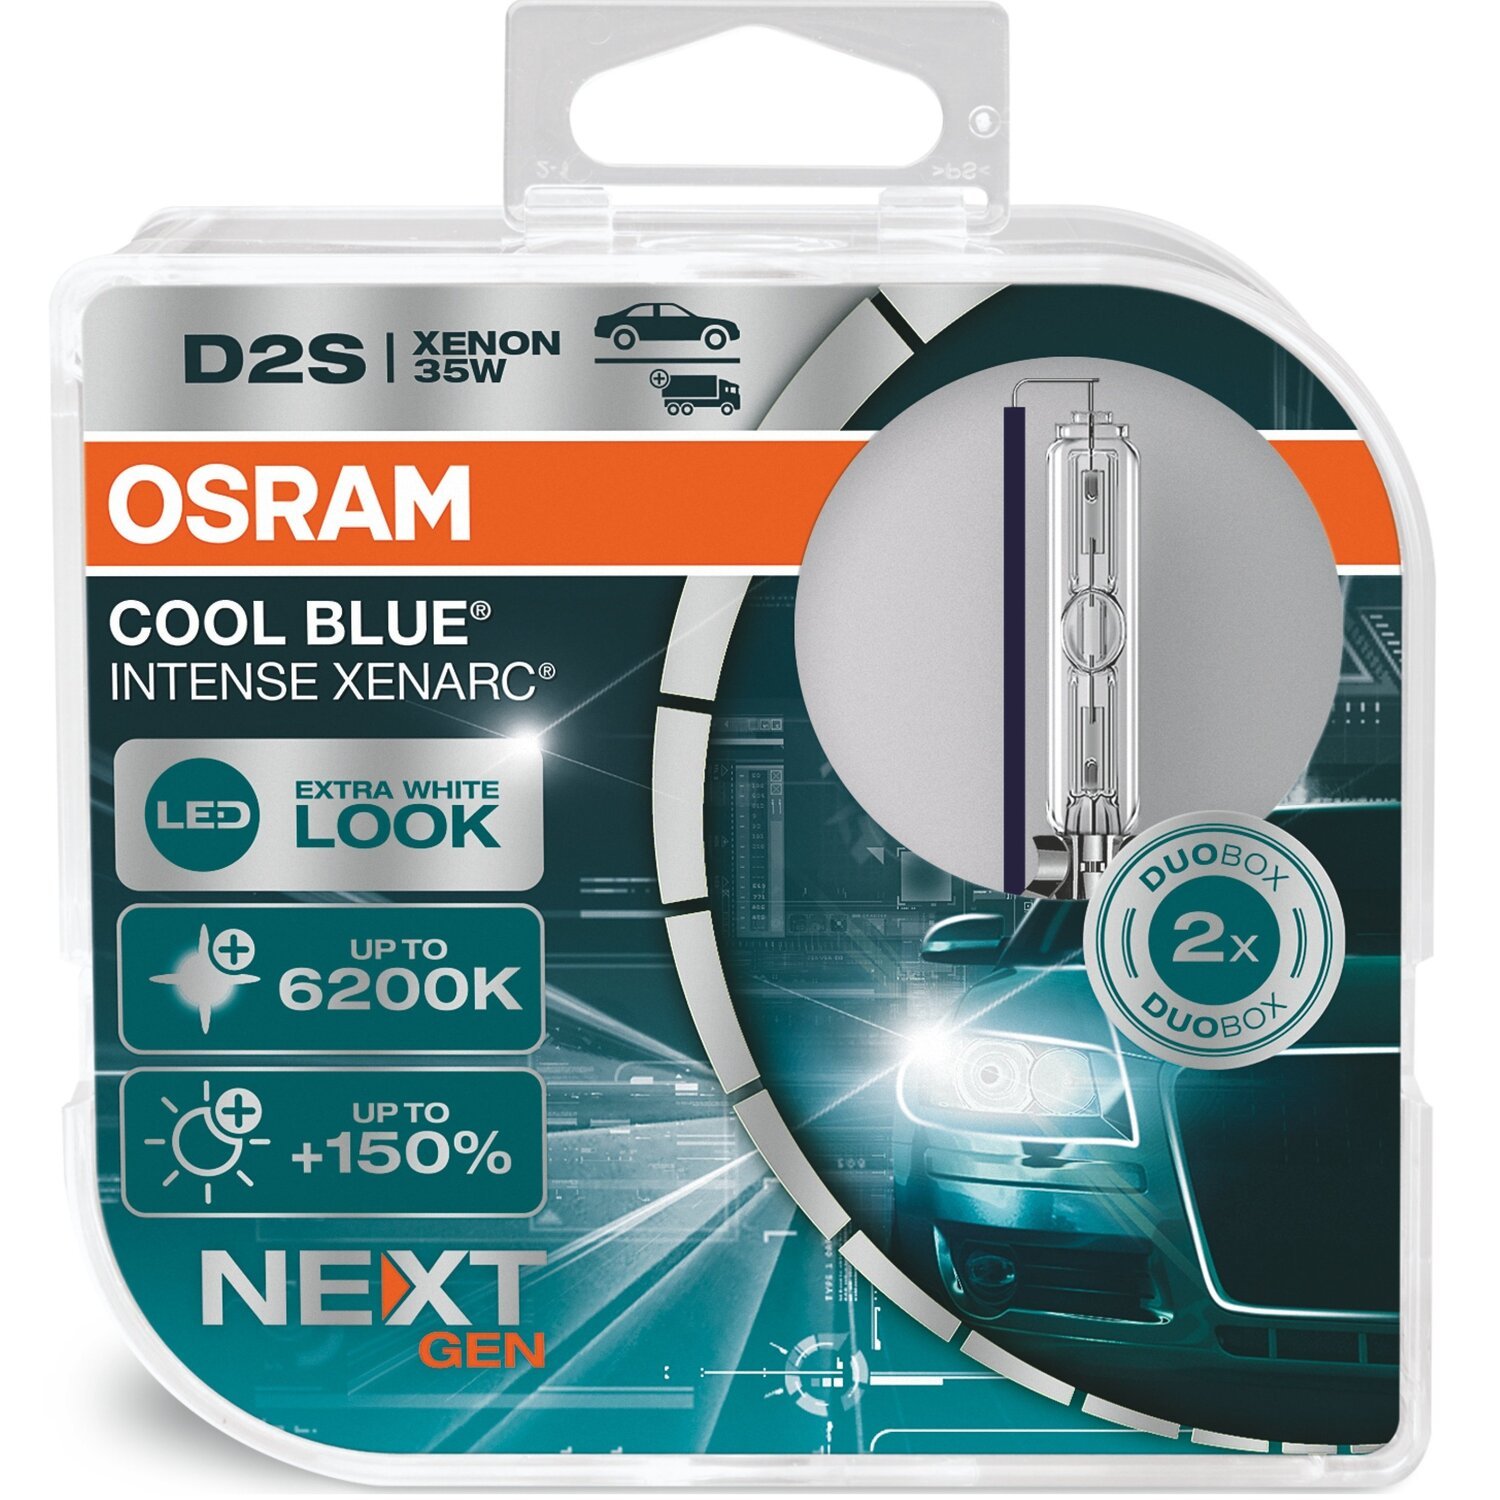 Лампа Osram ксеноновая 85V D2S 35W P32D-2 xenarc Cool Blue Intense, Duobox (2шт) (OS_66240_CBI-HCB) фото 